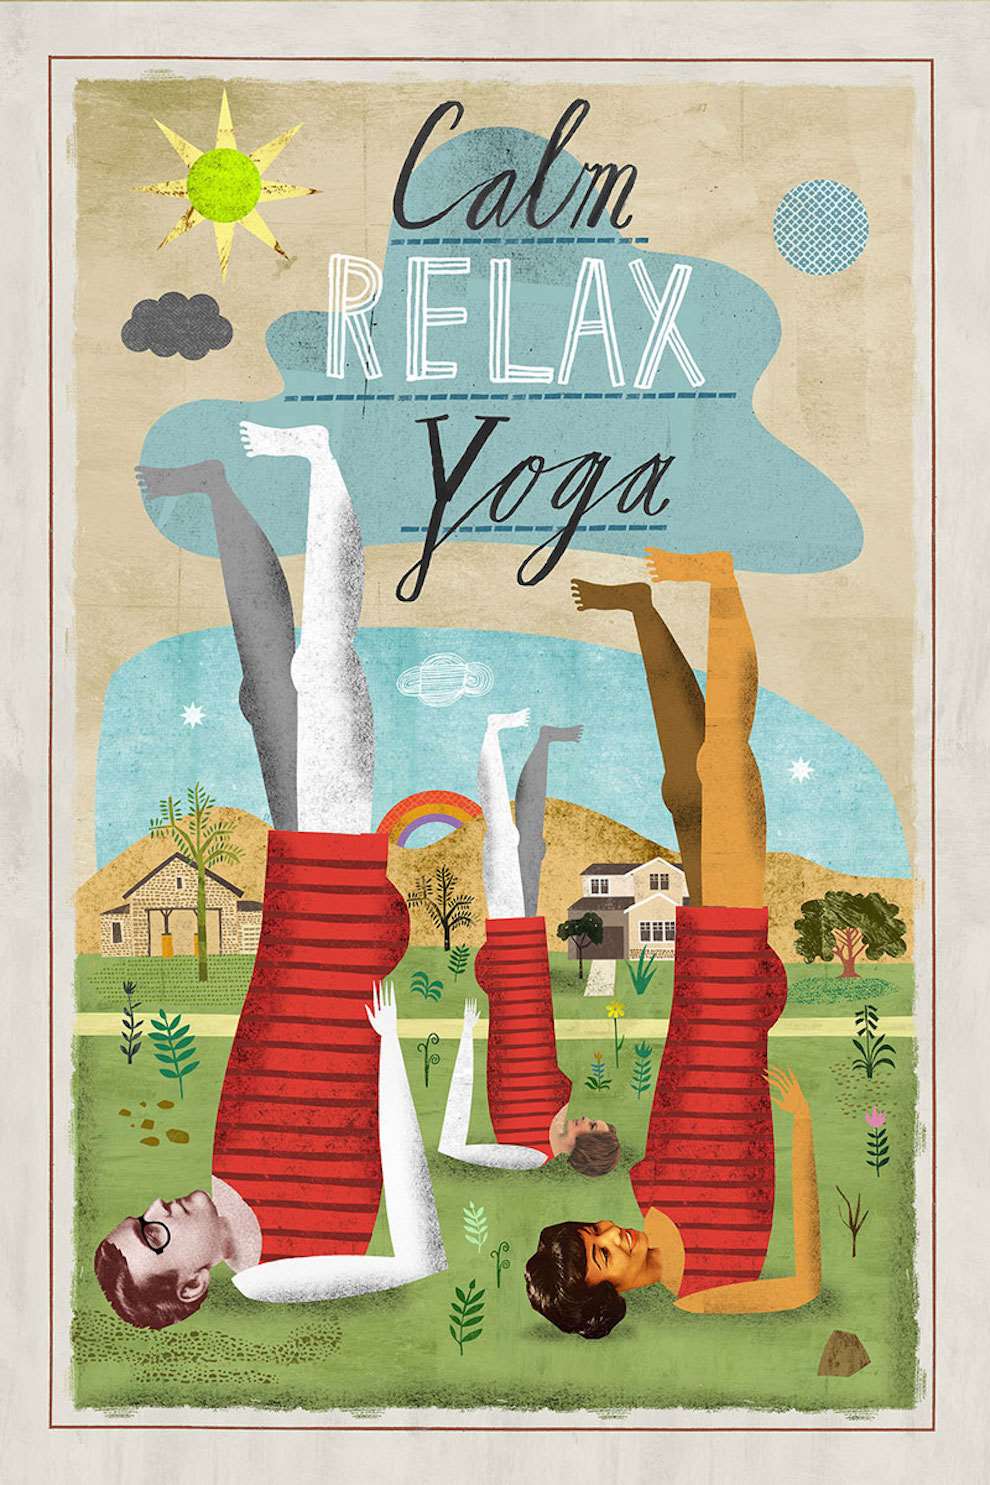 Martin Haake, Collage illustration of 3 people doing yoga 